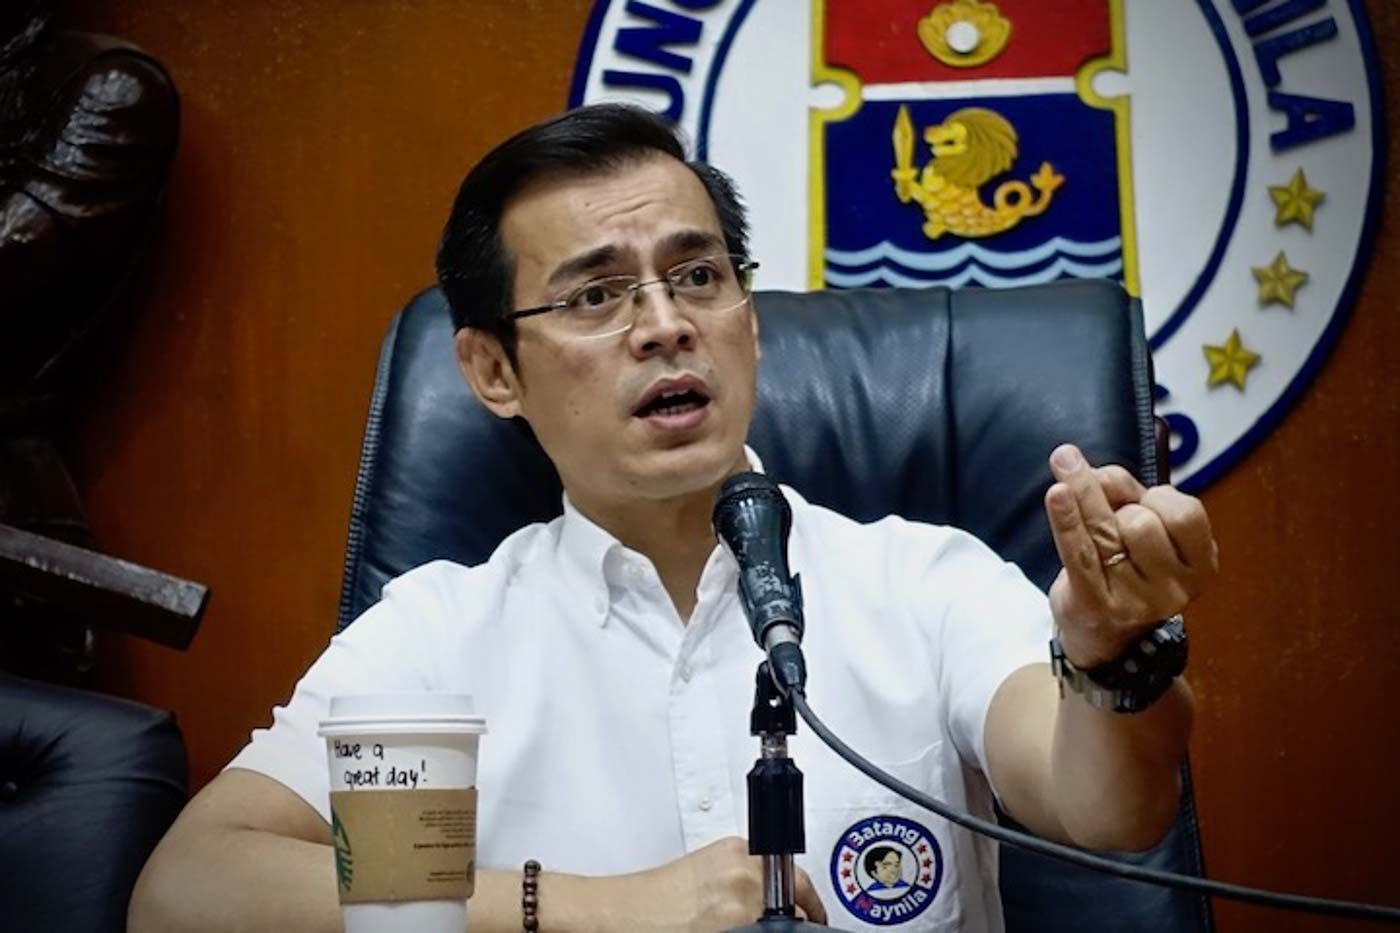 Double whammy: Isko Moreno revokes PCSO’s permits in Manila